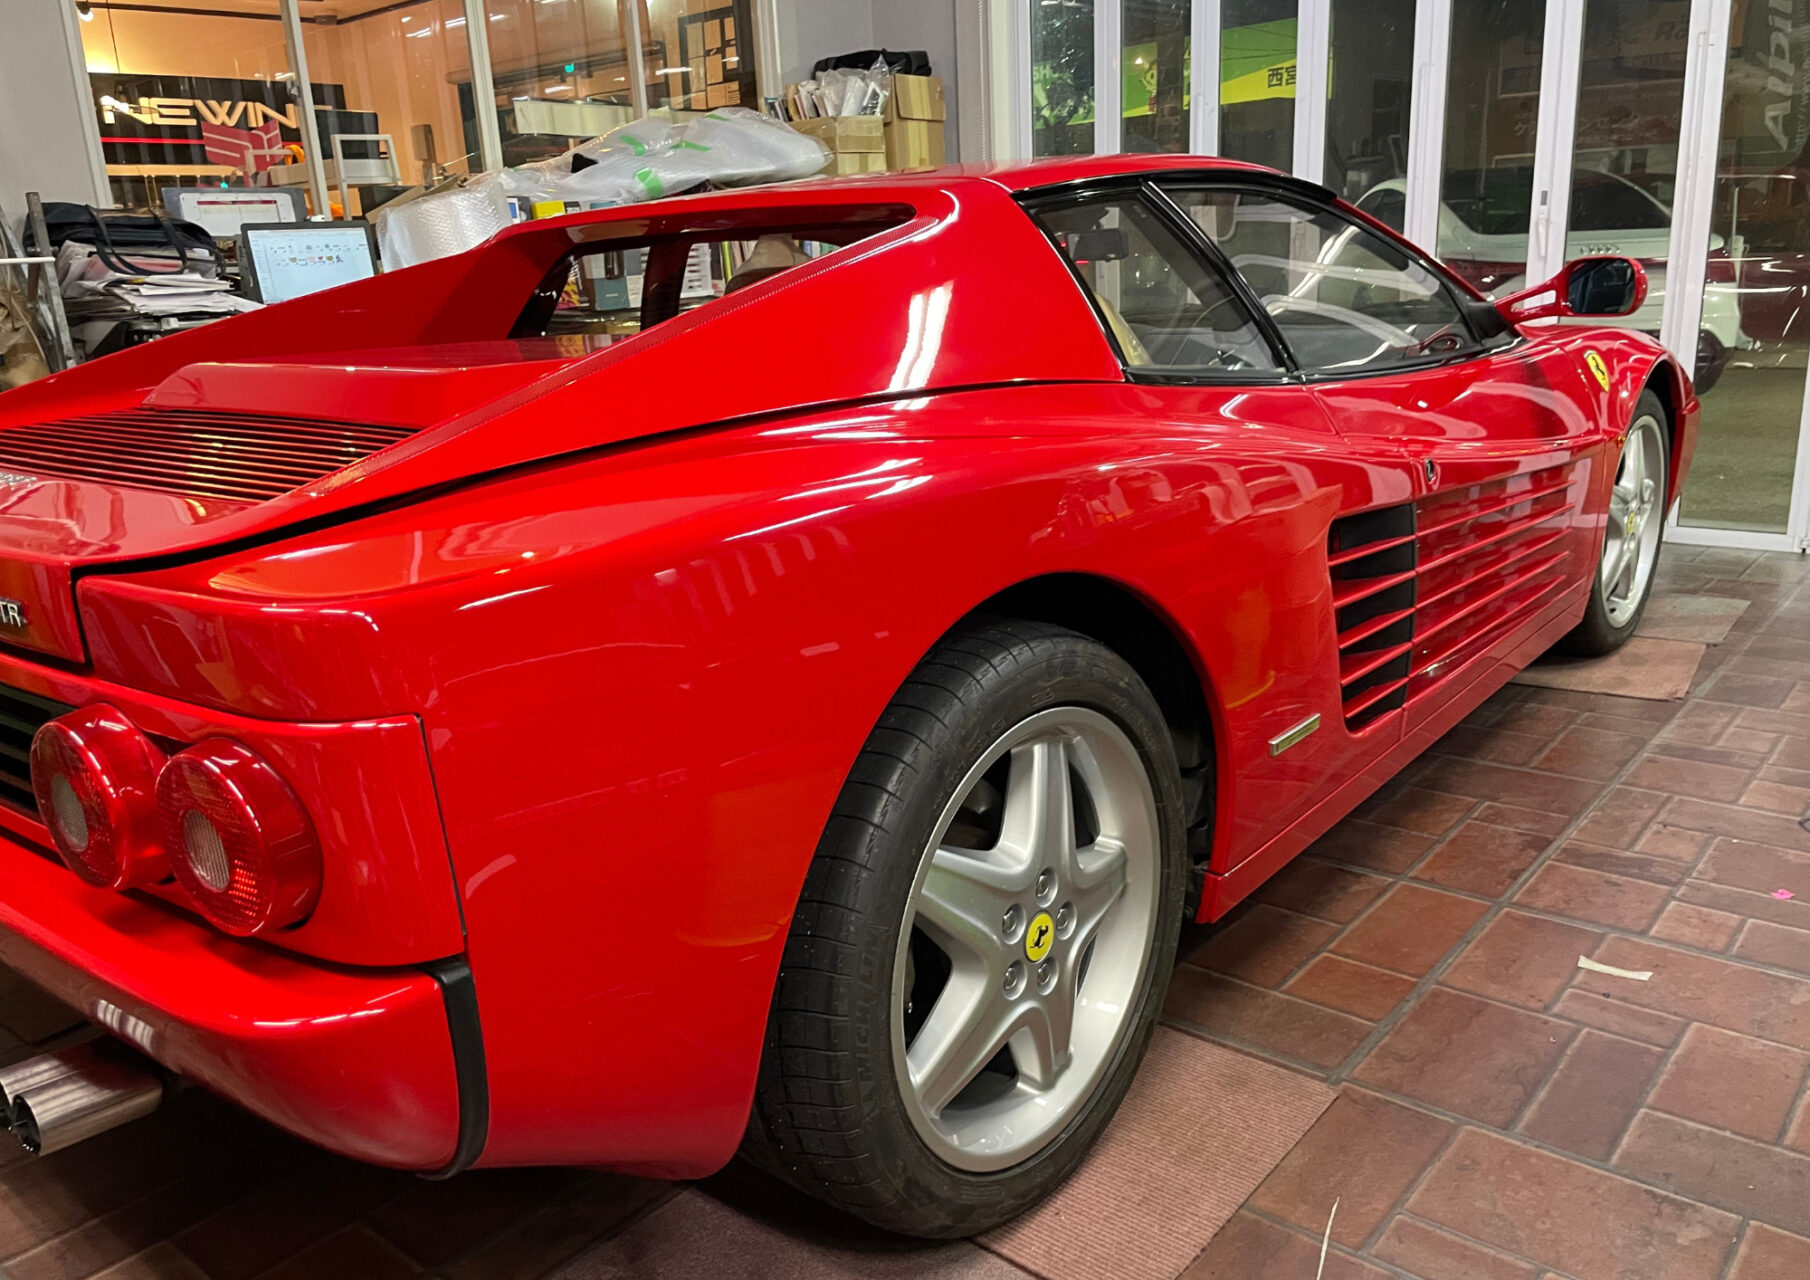 NEWINGカスタムインテリア 憧れの名車Ferrari Testarossaの内装張替